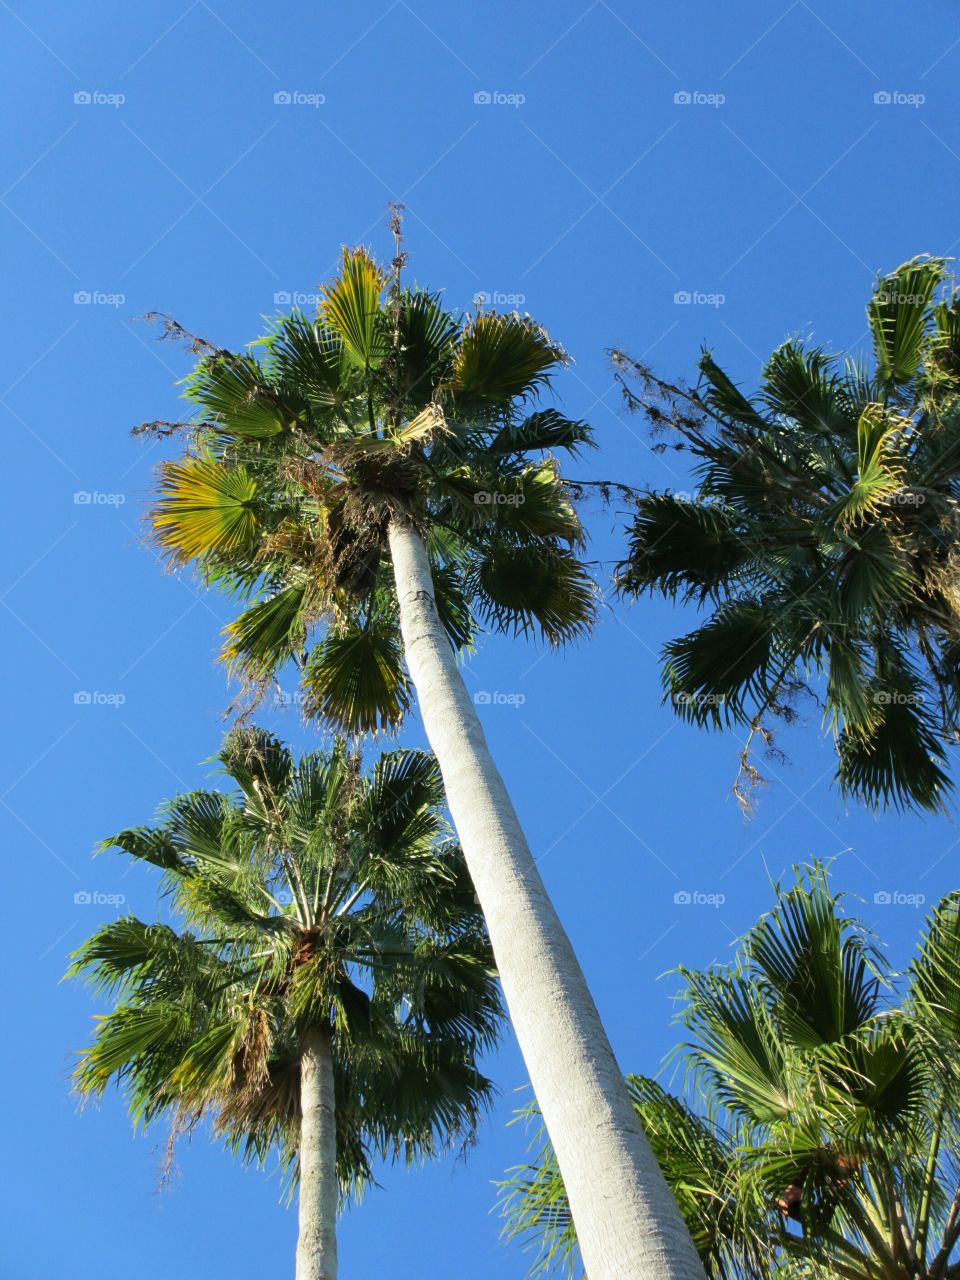 Palm trees. Palm trees reaching towards blue sky